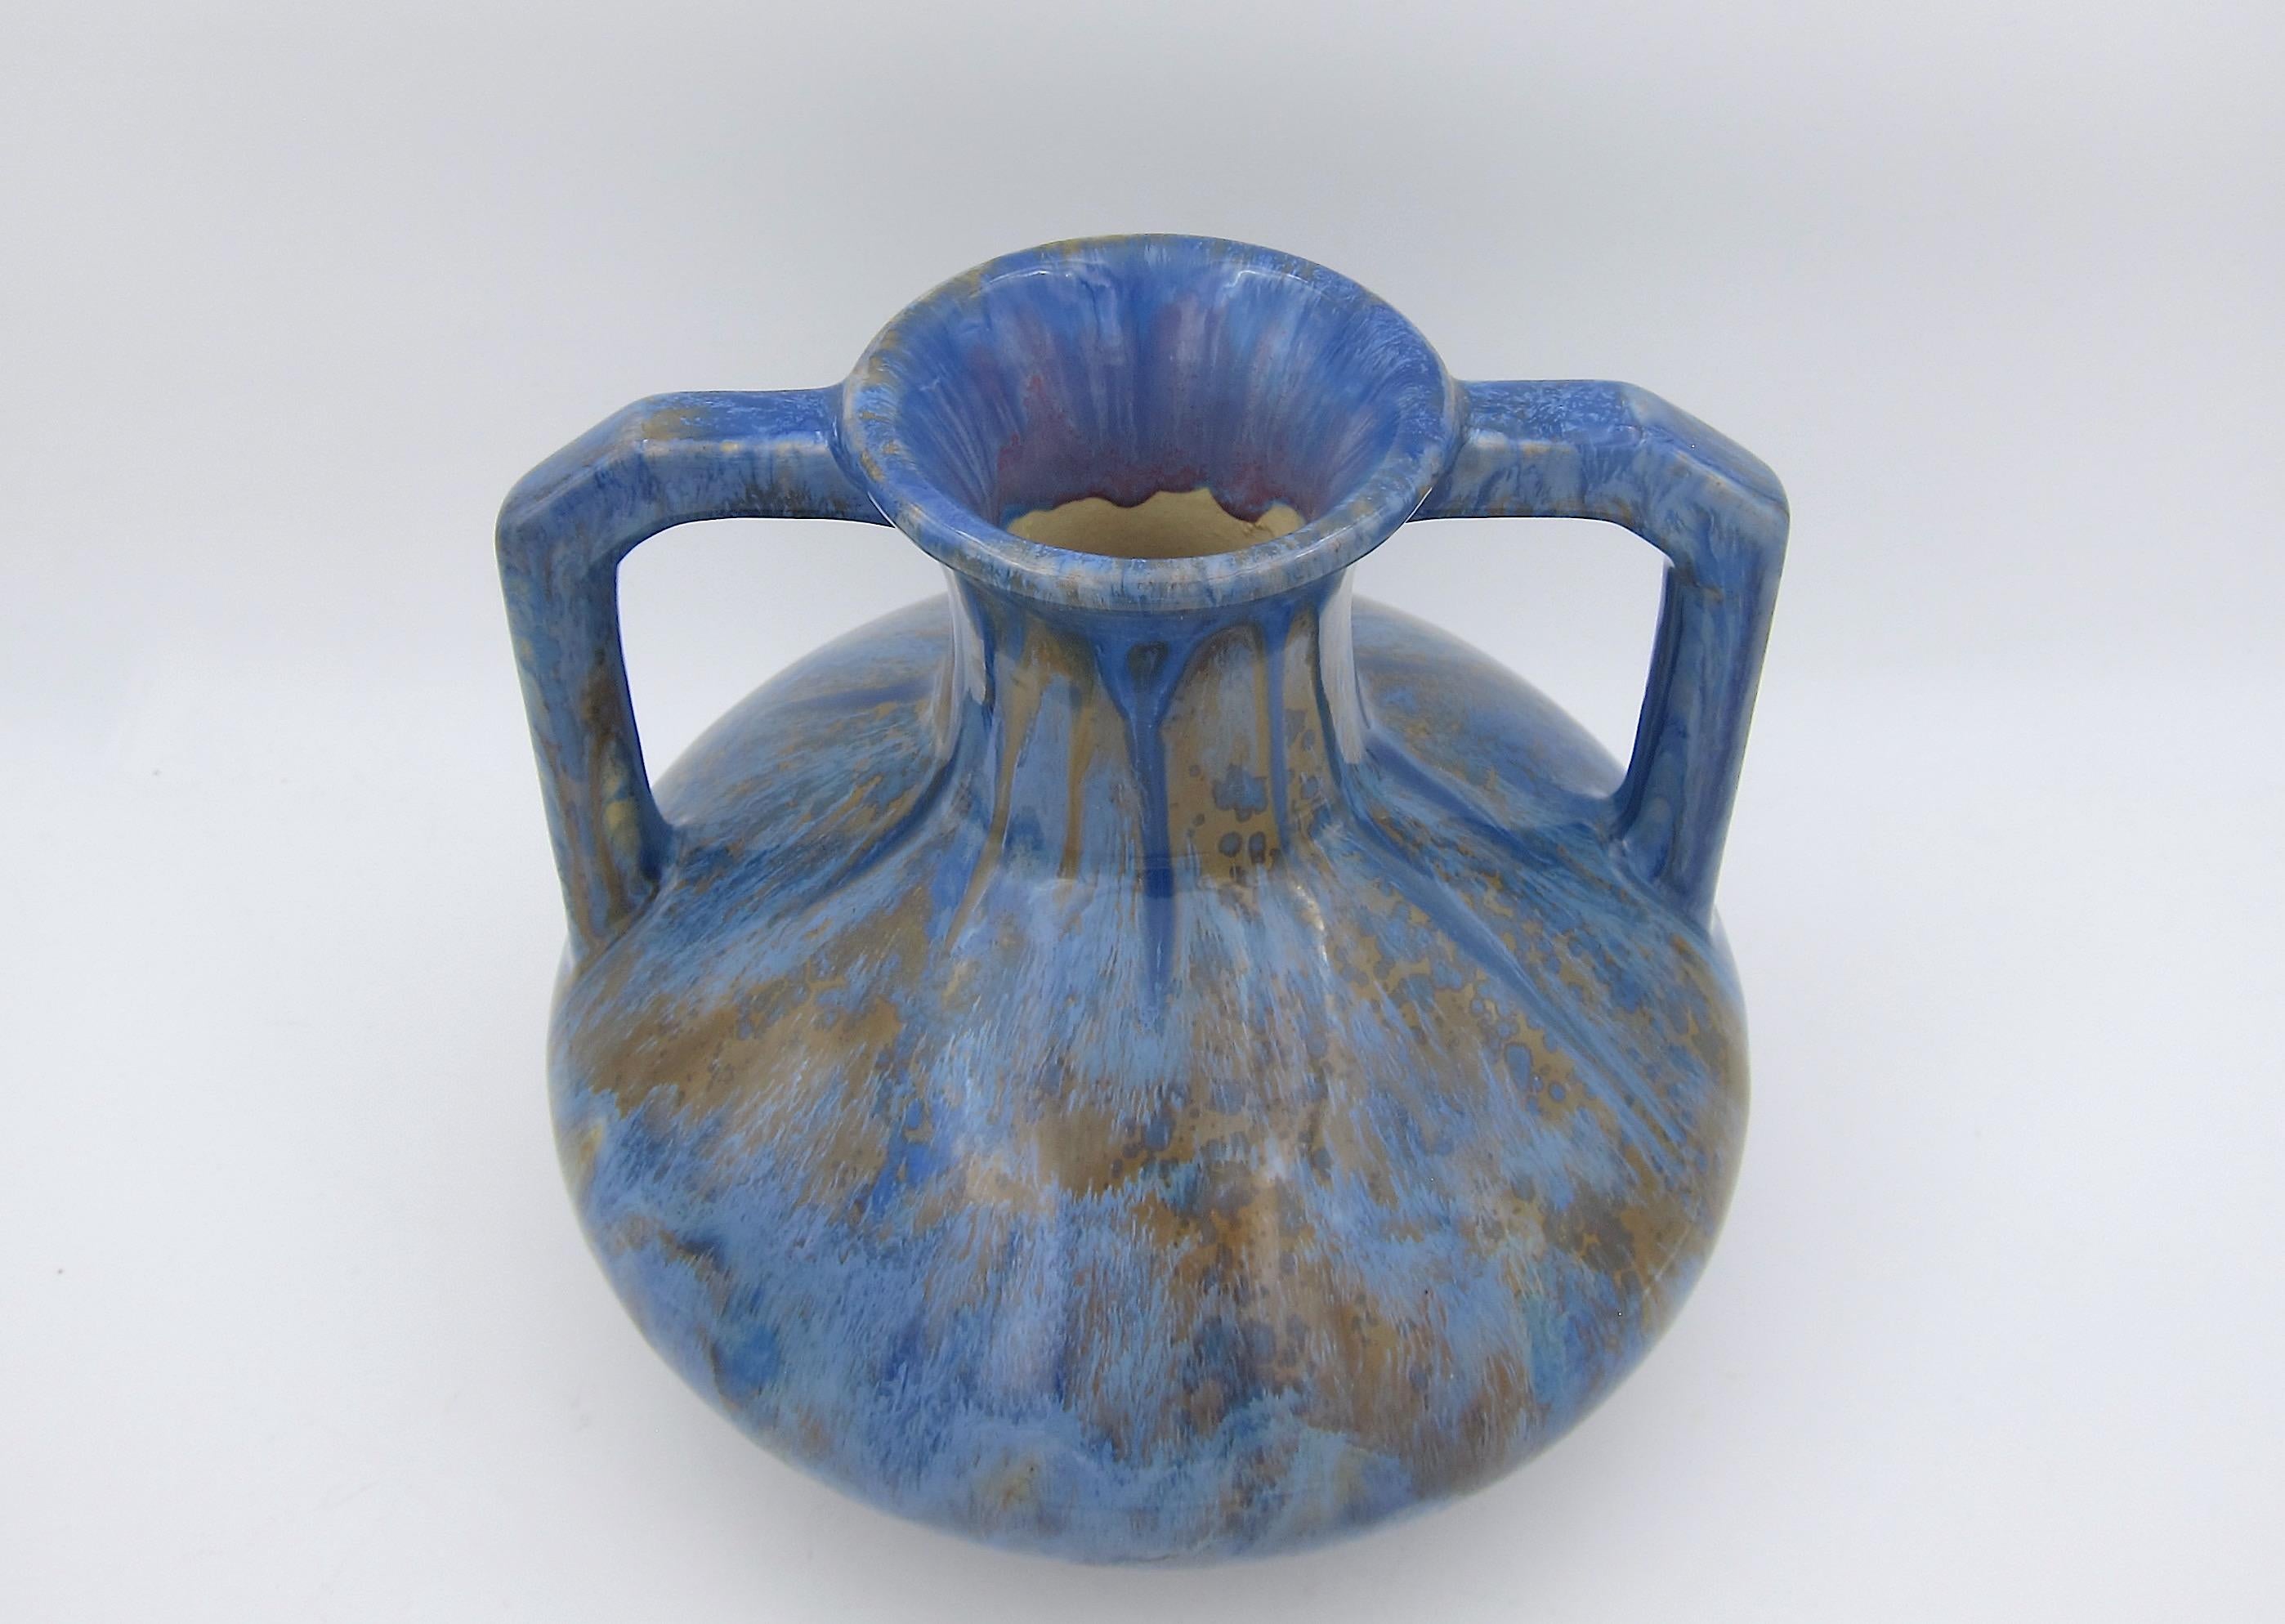 Ceramic French Pierrefonds Vase with Blue Crystalline Glaze